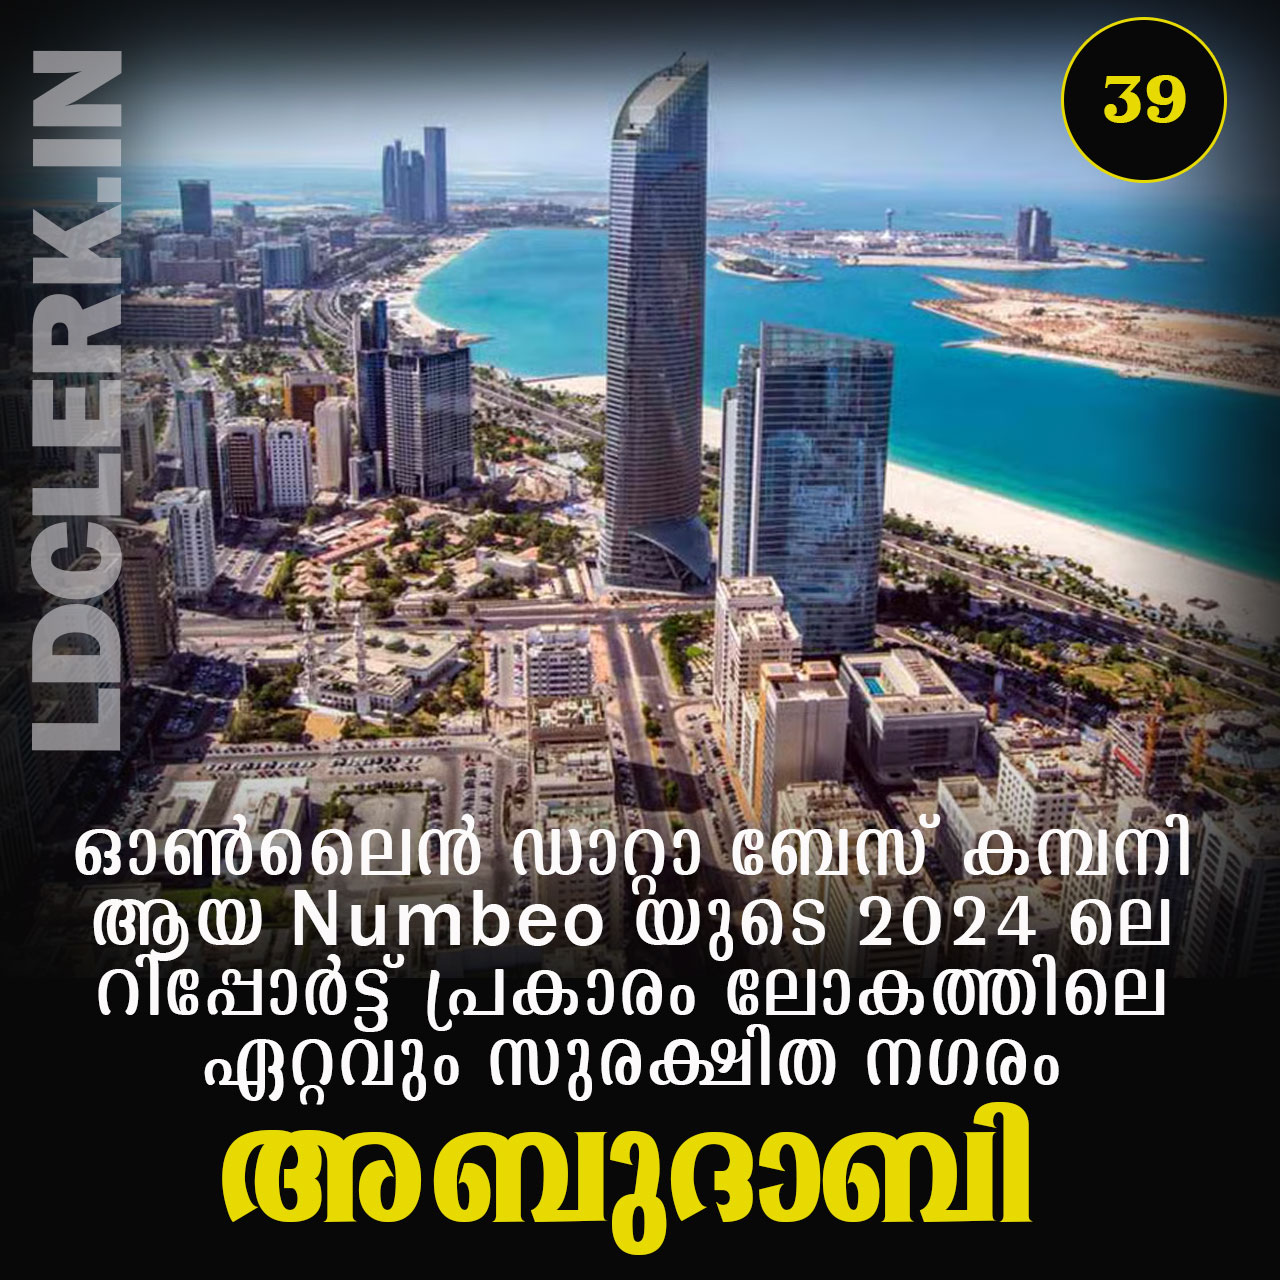 Safest city in the world Abu Dhabi